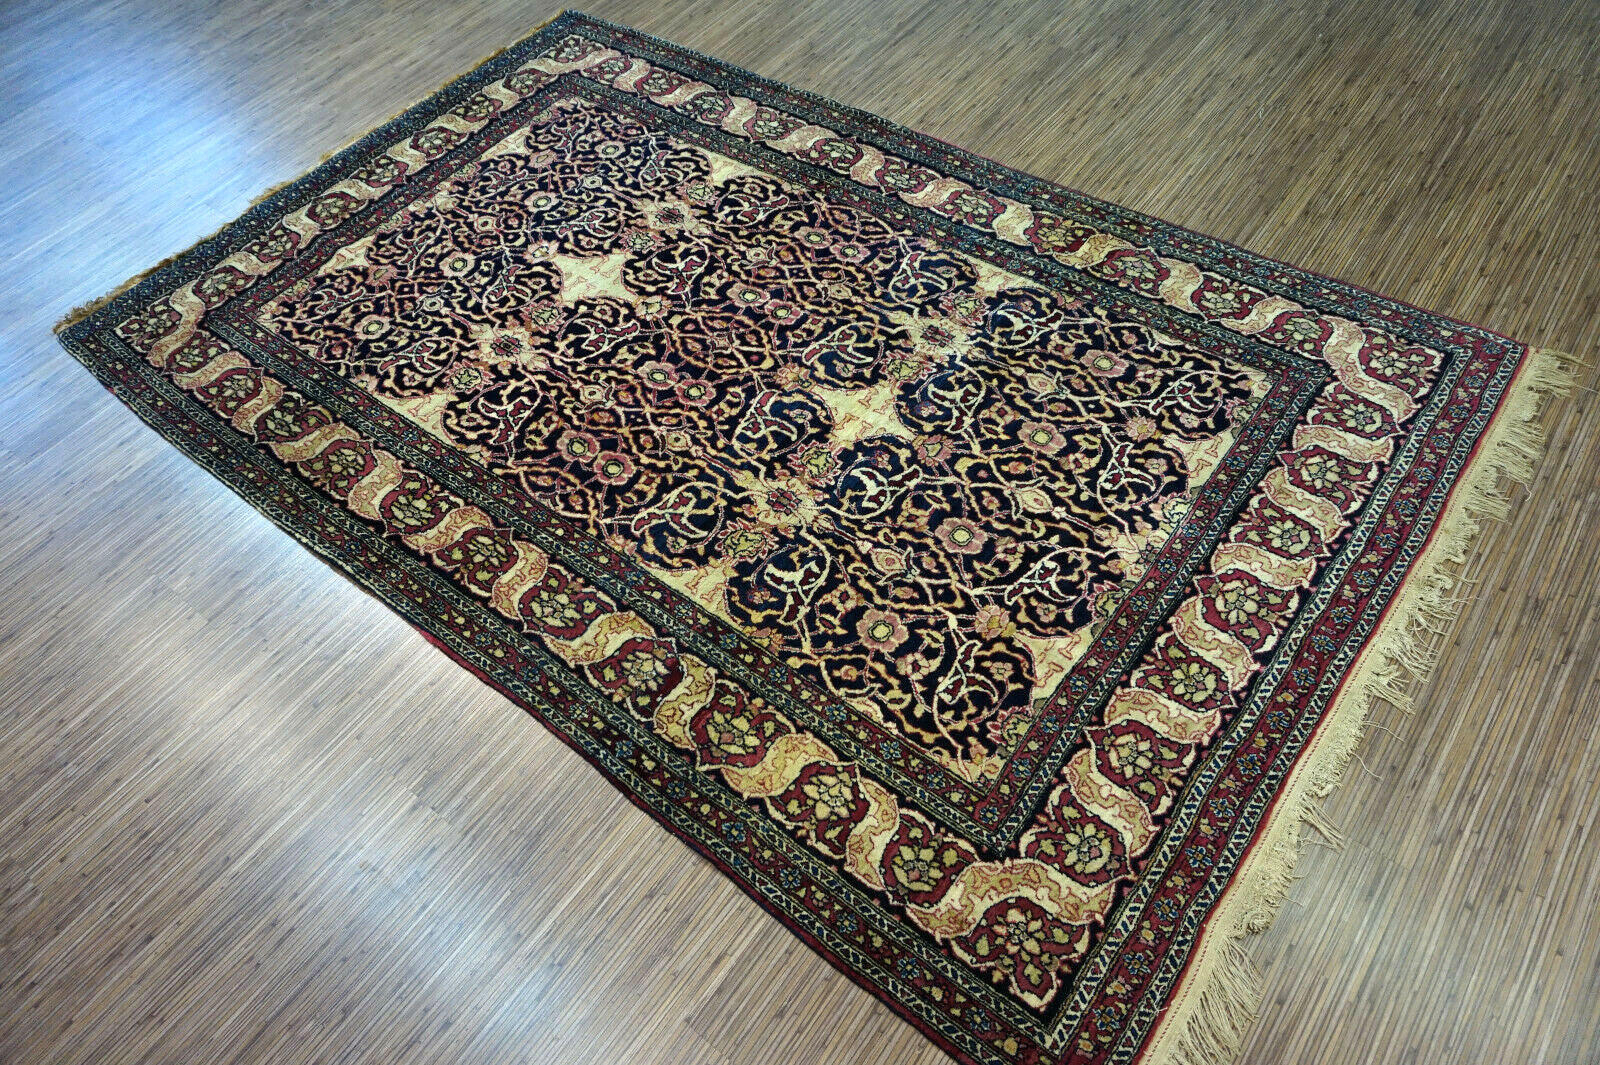 Handmade antique Persian Isfahan rug 1900s